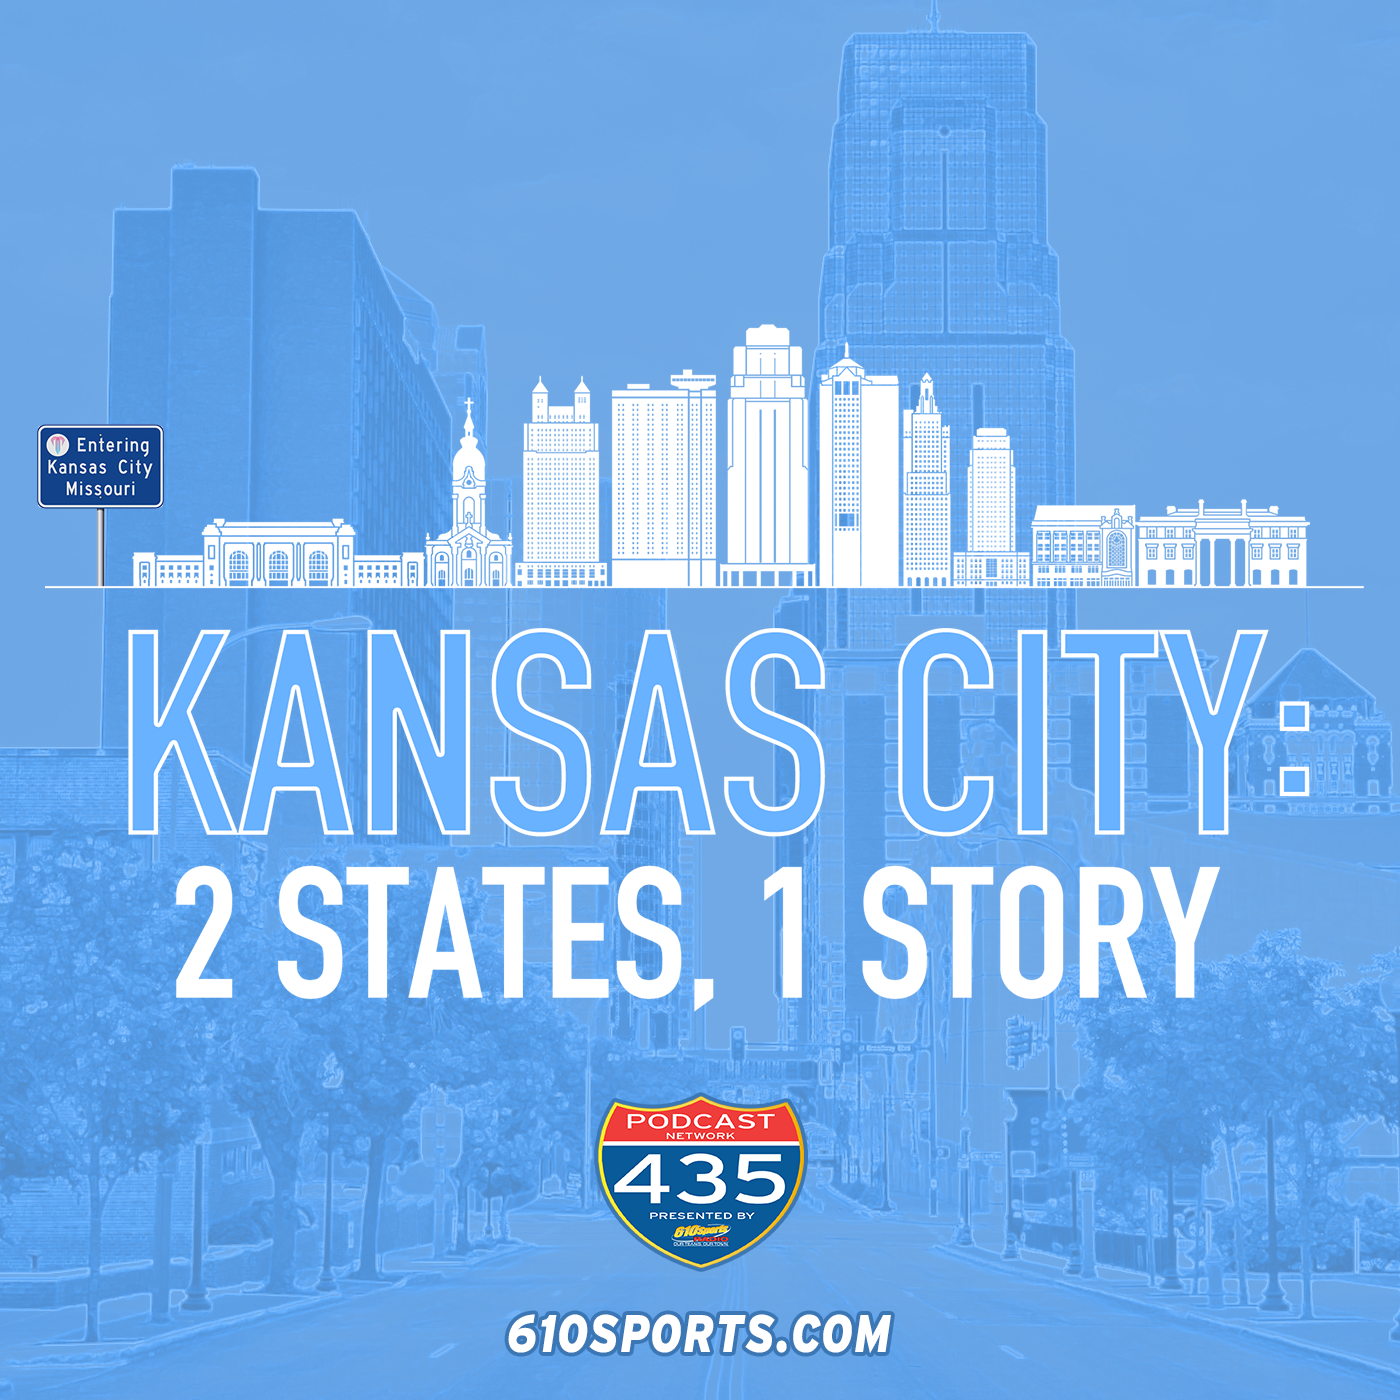 1/15 Kansas City: 2 States, 1 Story